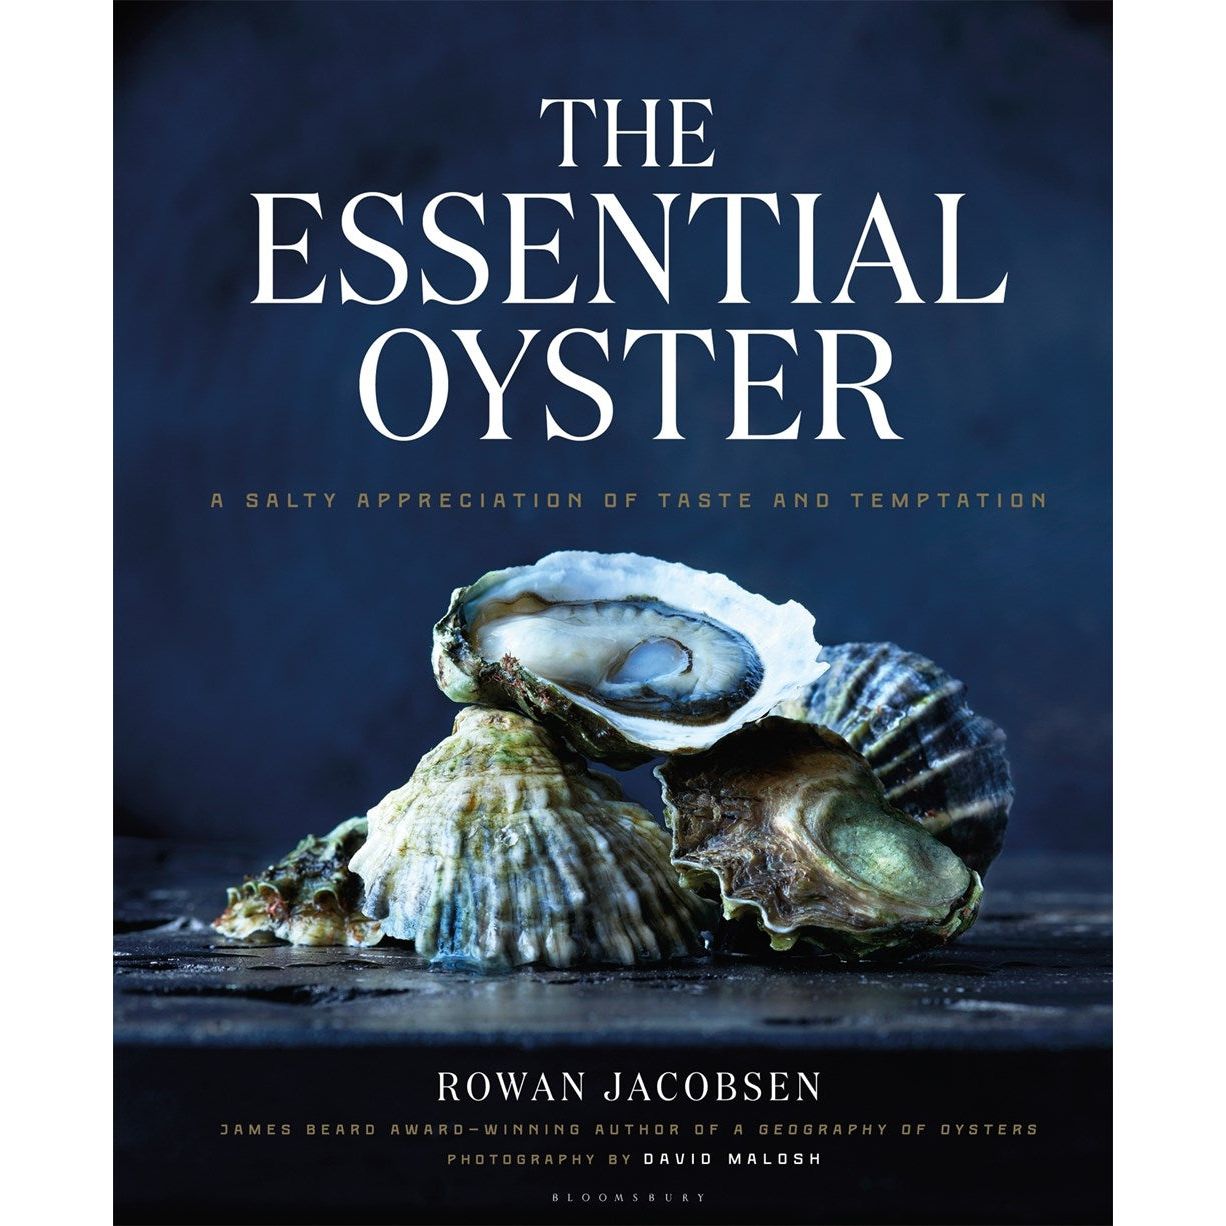 The Essential Oyster (Rowan Jacobsen)